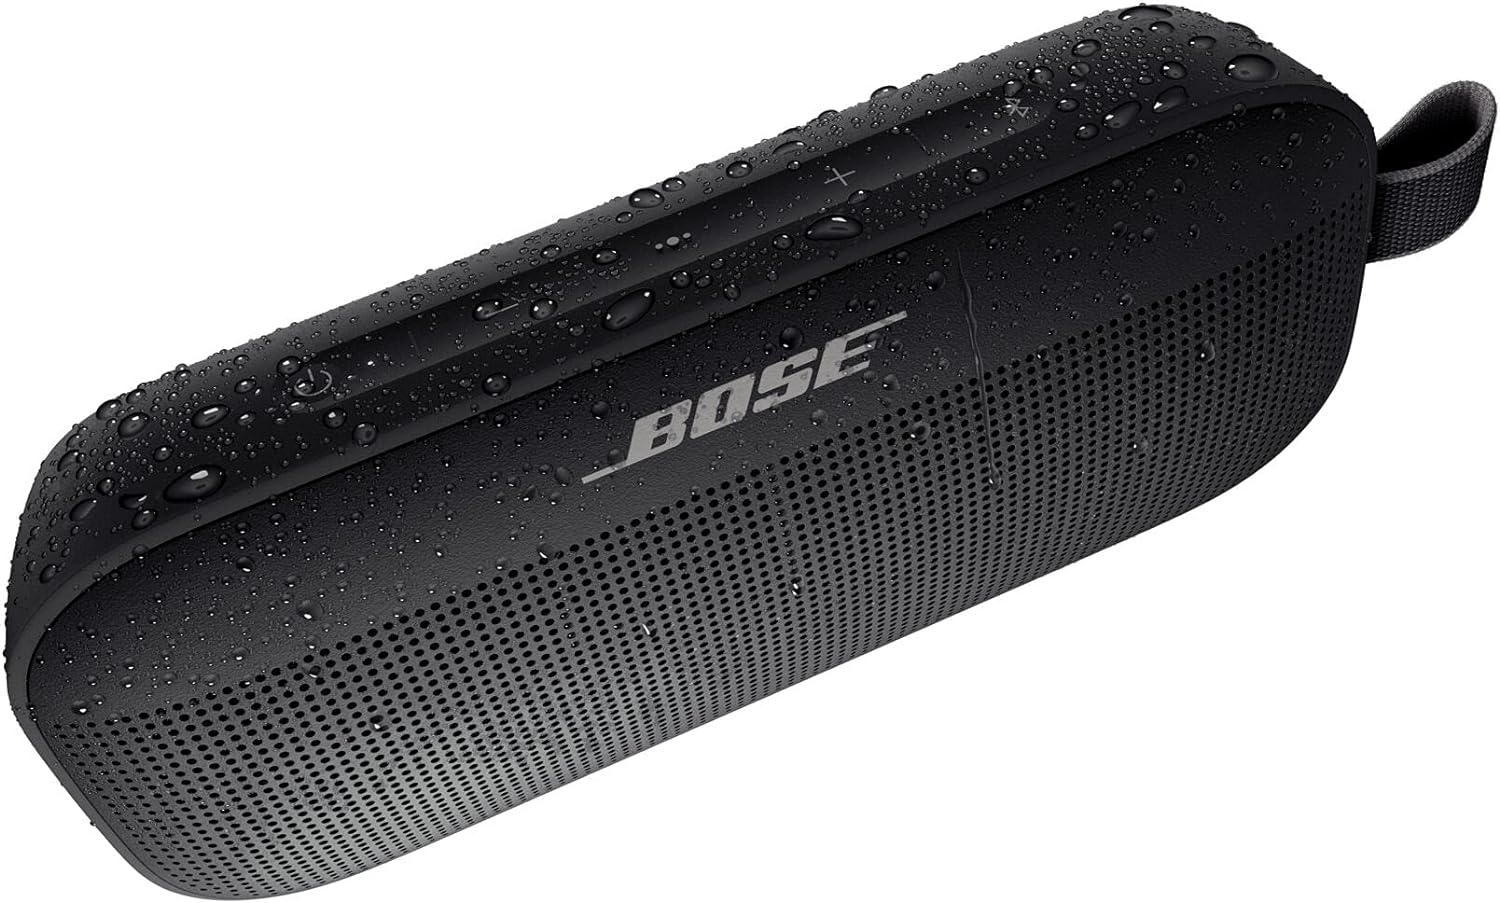 Bose SoundLink Micro Bluetooth Speaker: Small Portable Waterproof Speaker  with Microphone, Black